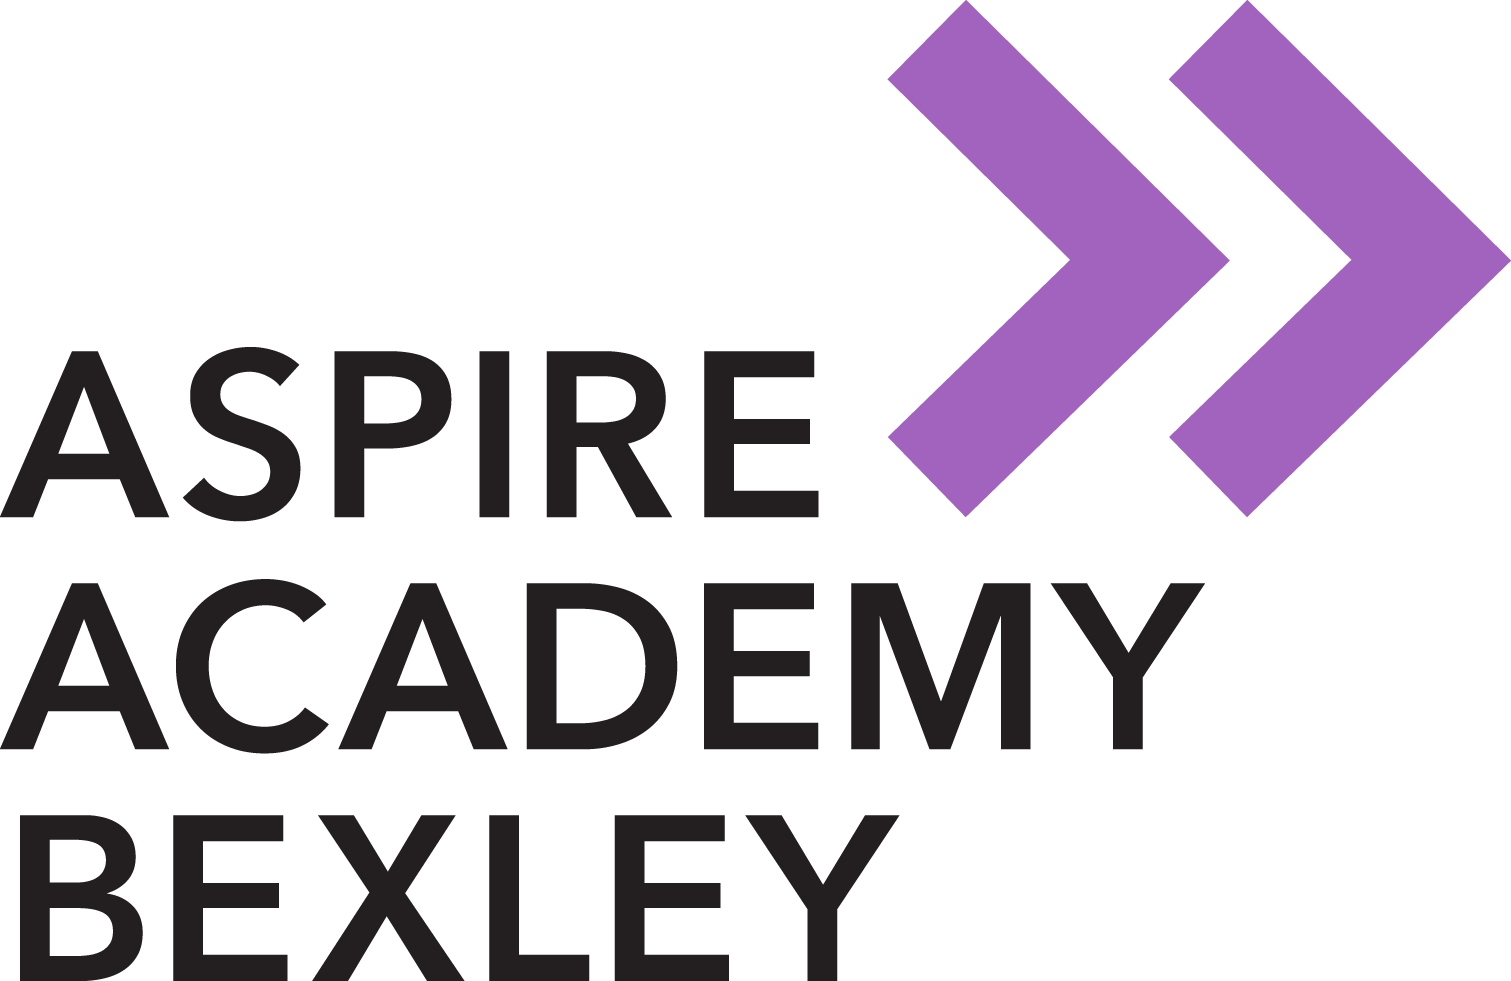 Aspire Academy Bexley